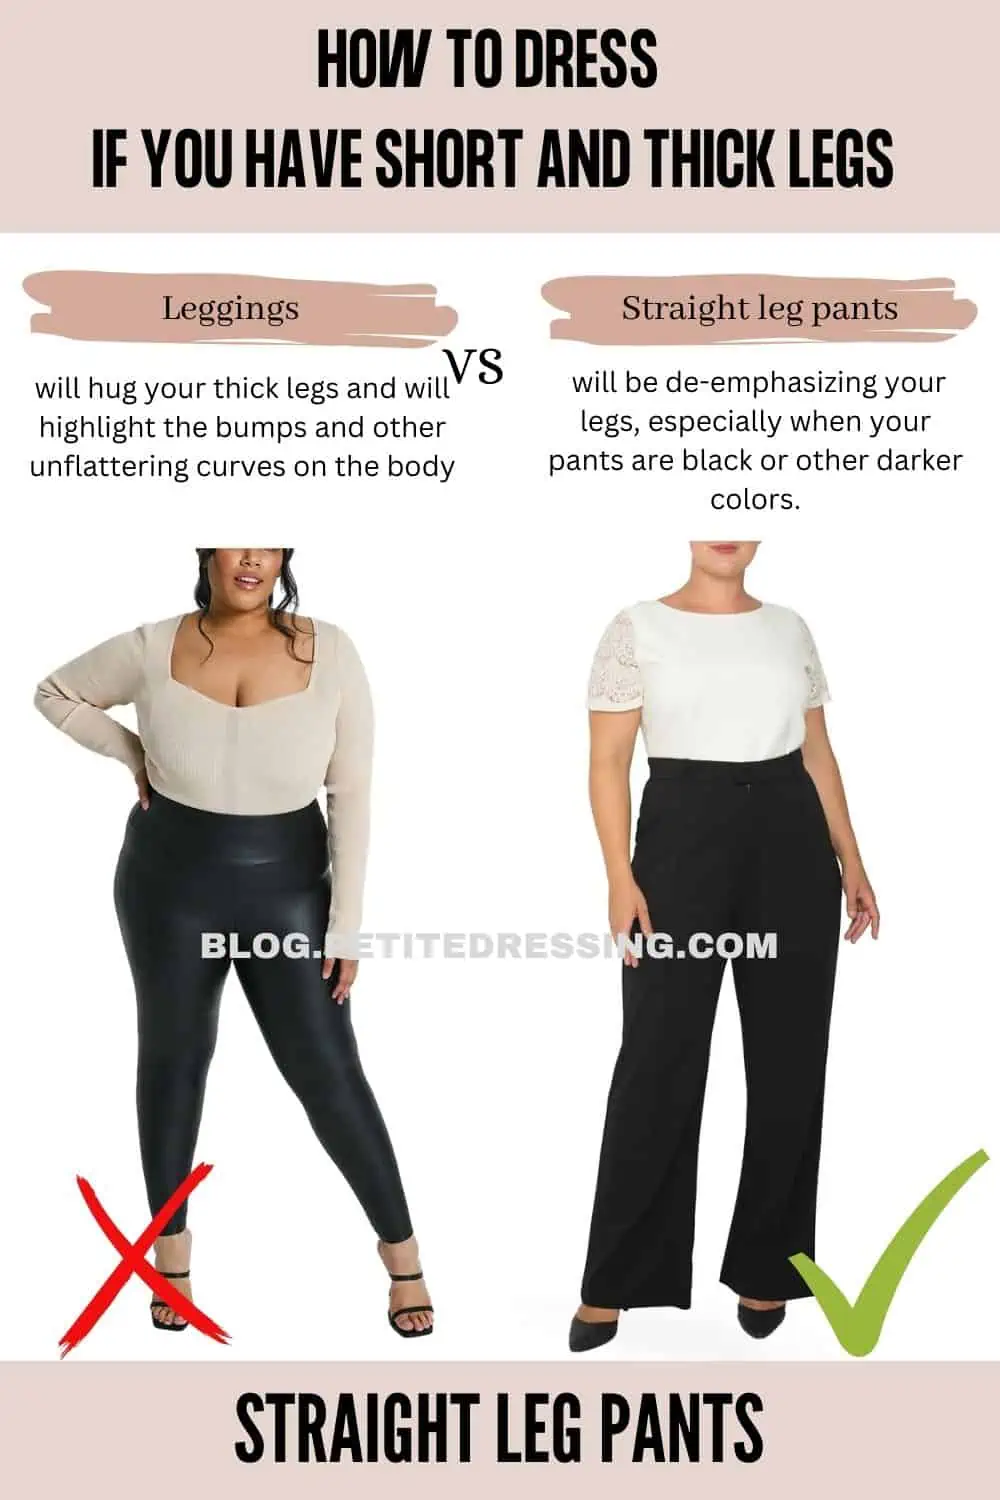 https://blog.petitedressing.com/wp-content/uploads/2019/06/Straight-leg-pants.webp